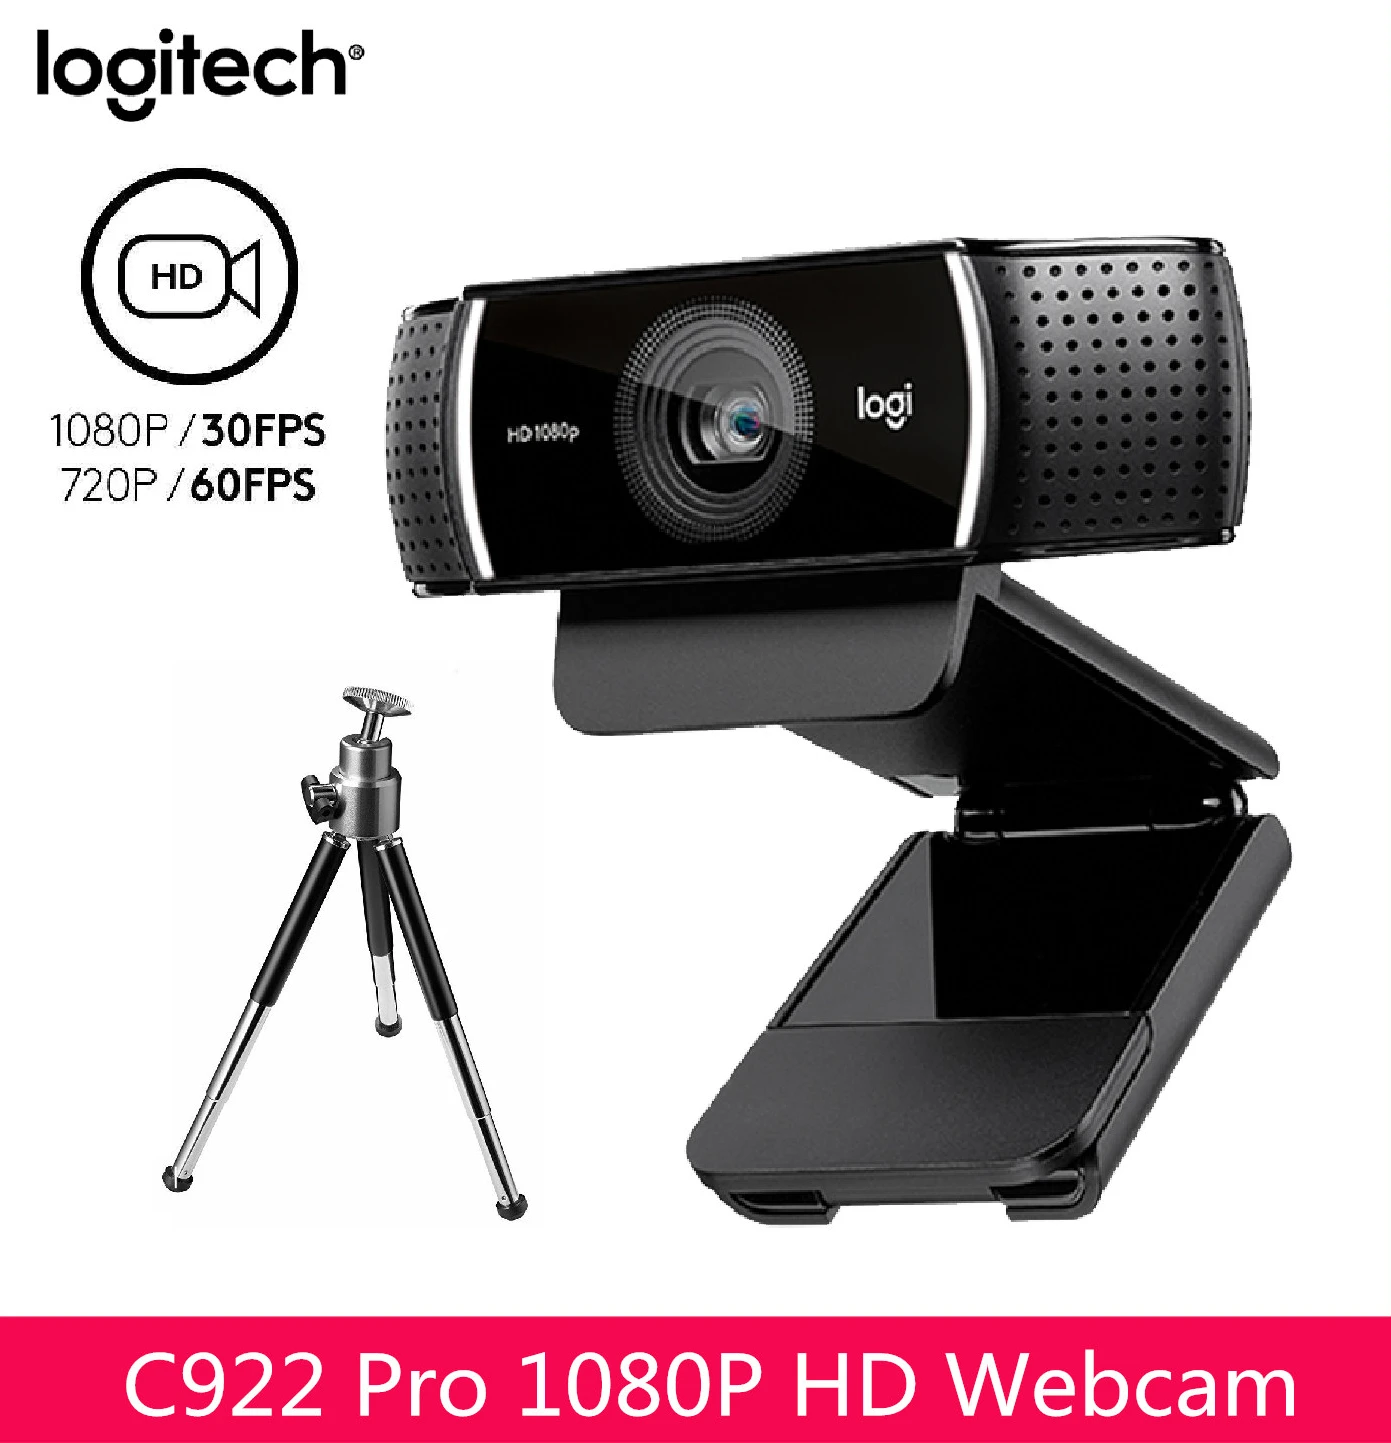 

Original Logitech C922 Pro Webcam Built-in Microphone With Tripod 1080p HD Camera C922 Logitech 1080P Web 30FP